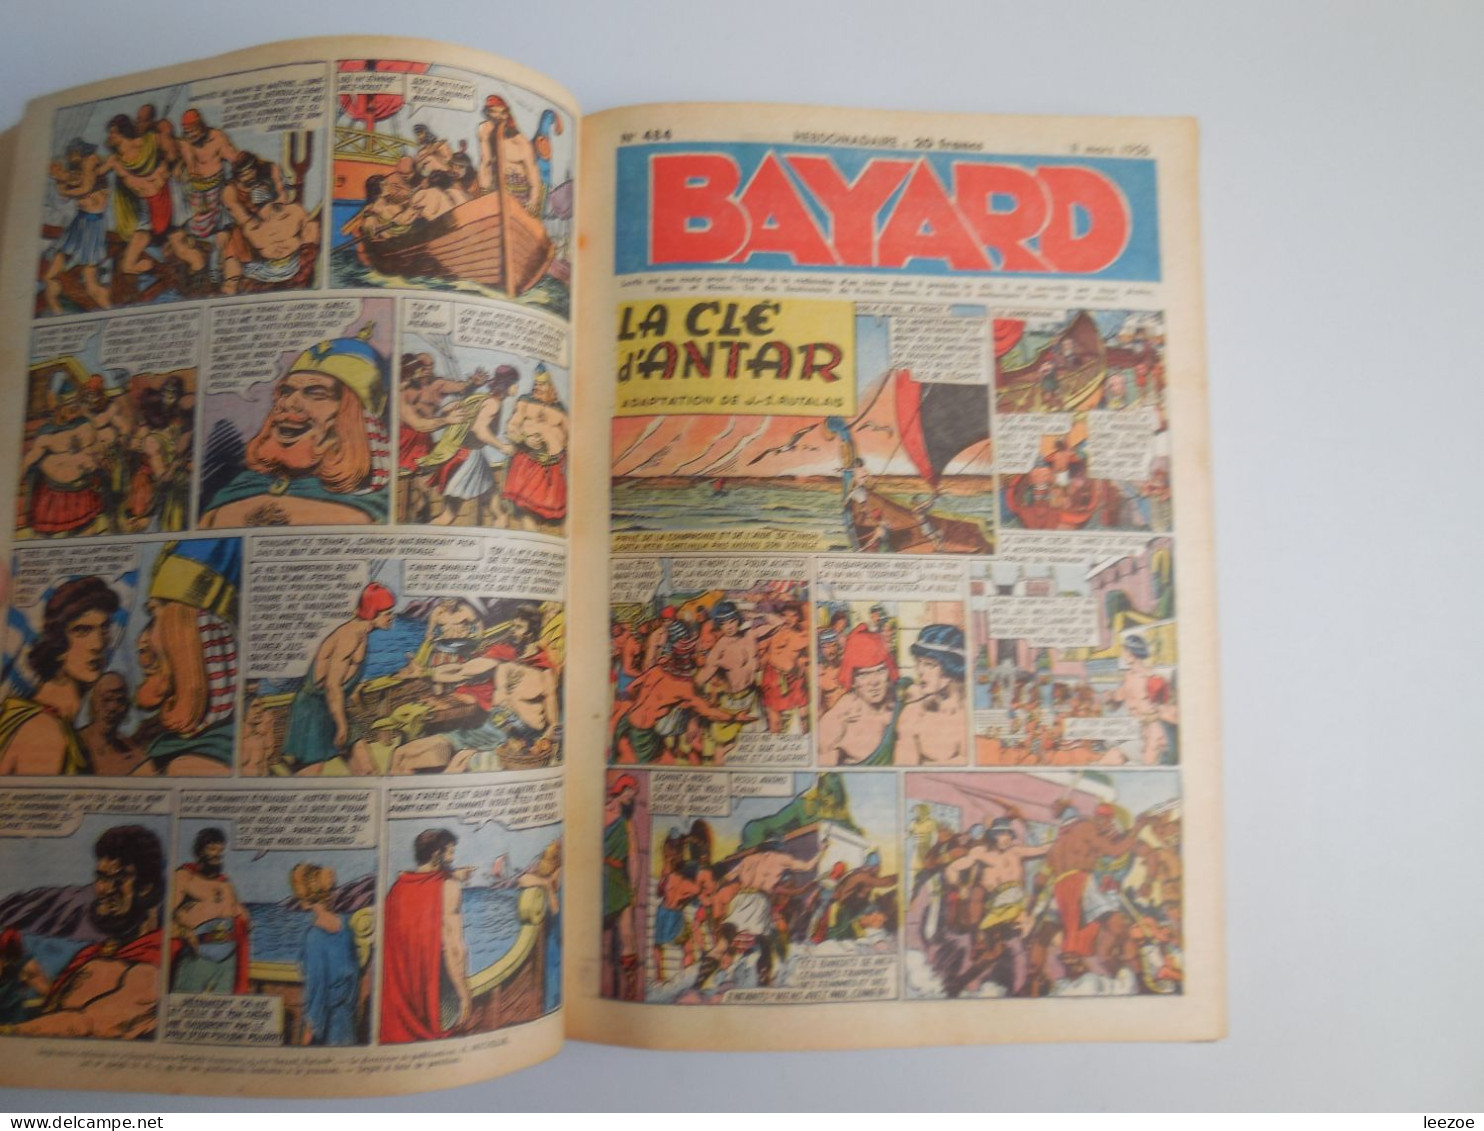 BD BAYARD, Recueil Bayard (Album du journal) Album N°19 (du N°474 à 499), complet...(ref 2.5.N5/)